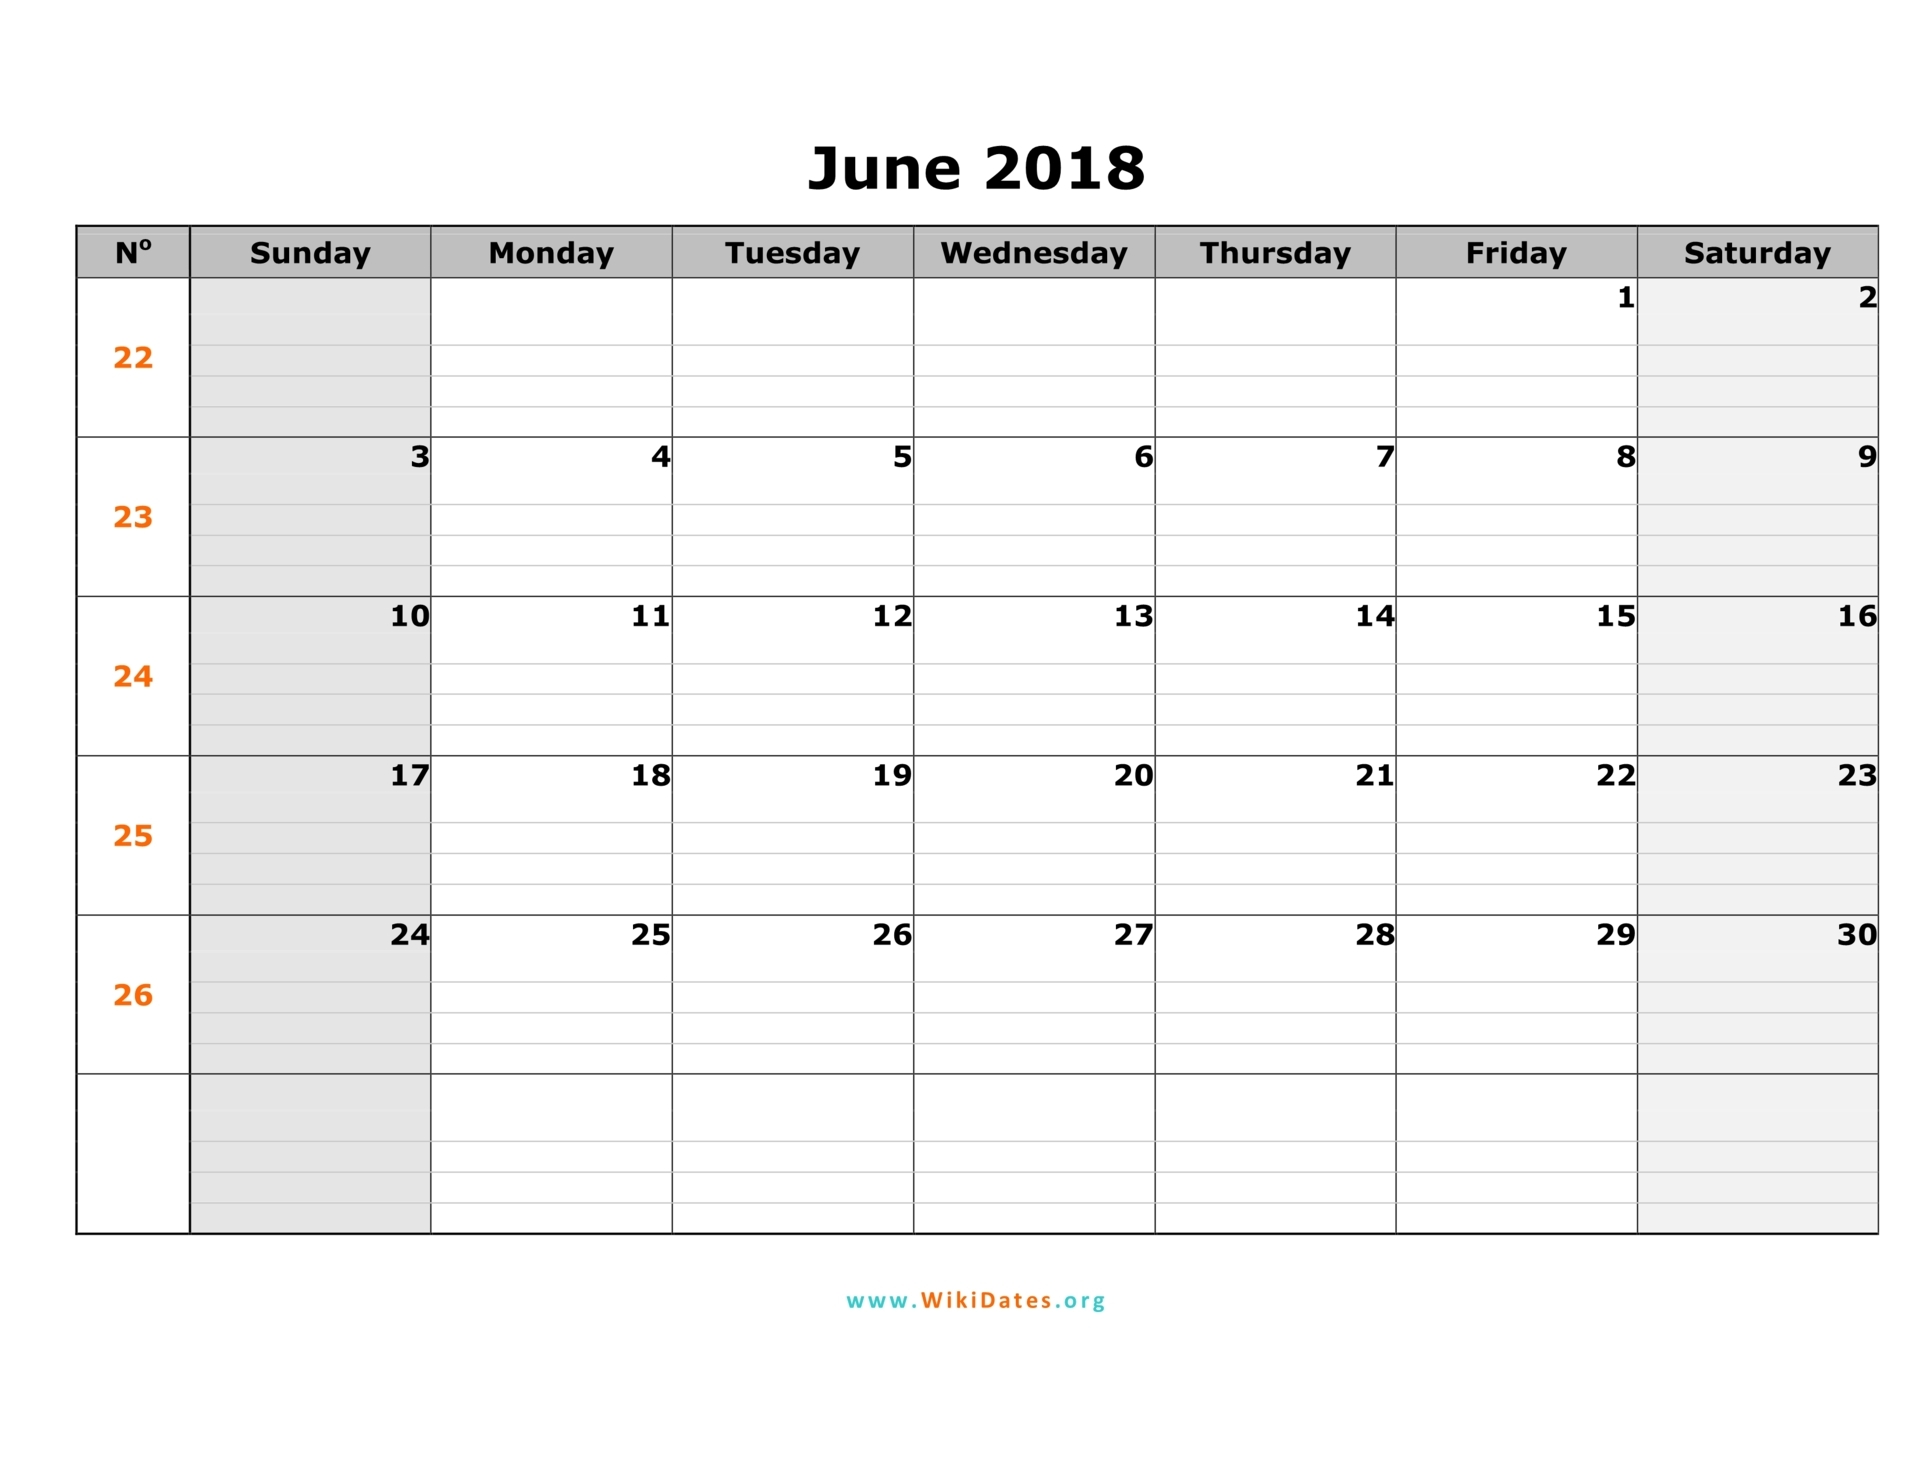 June 2018 Calendar WikiDates org